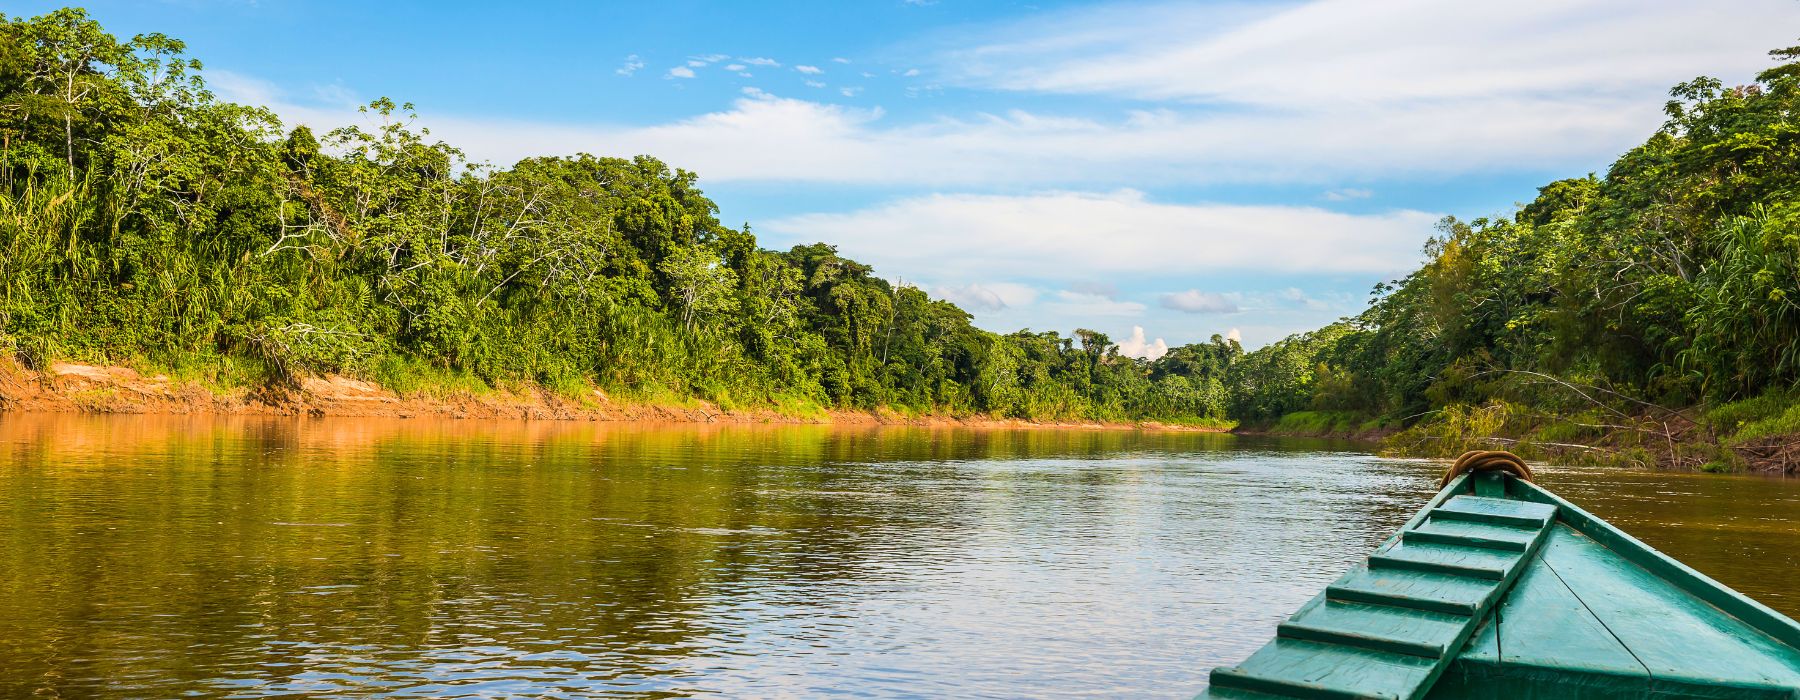 AMAZON RIVER FISH: BEST KNOWN SPECIES